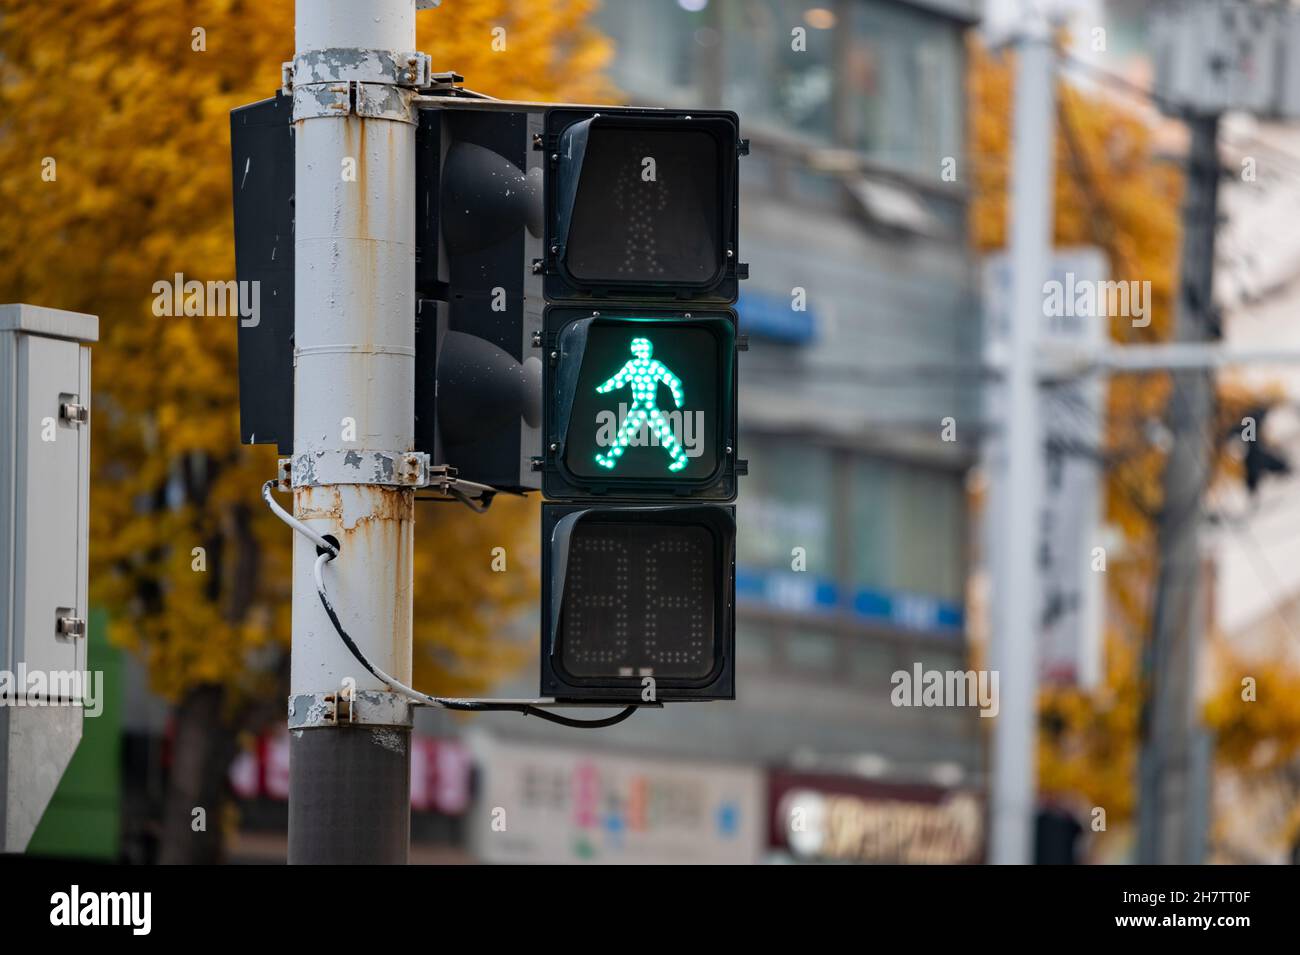 A traffic light with a green pedestrian traffic light on. South Korea Stock Photo